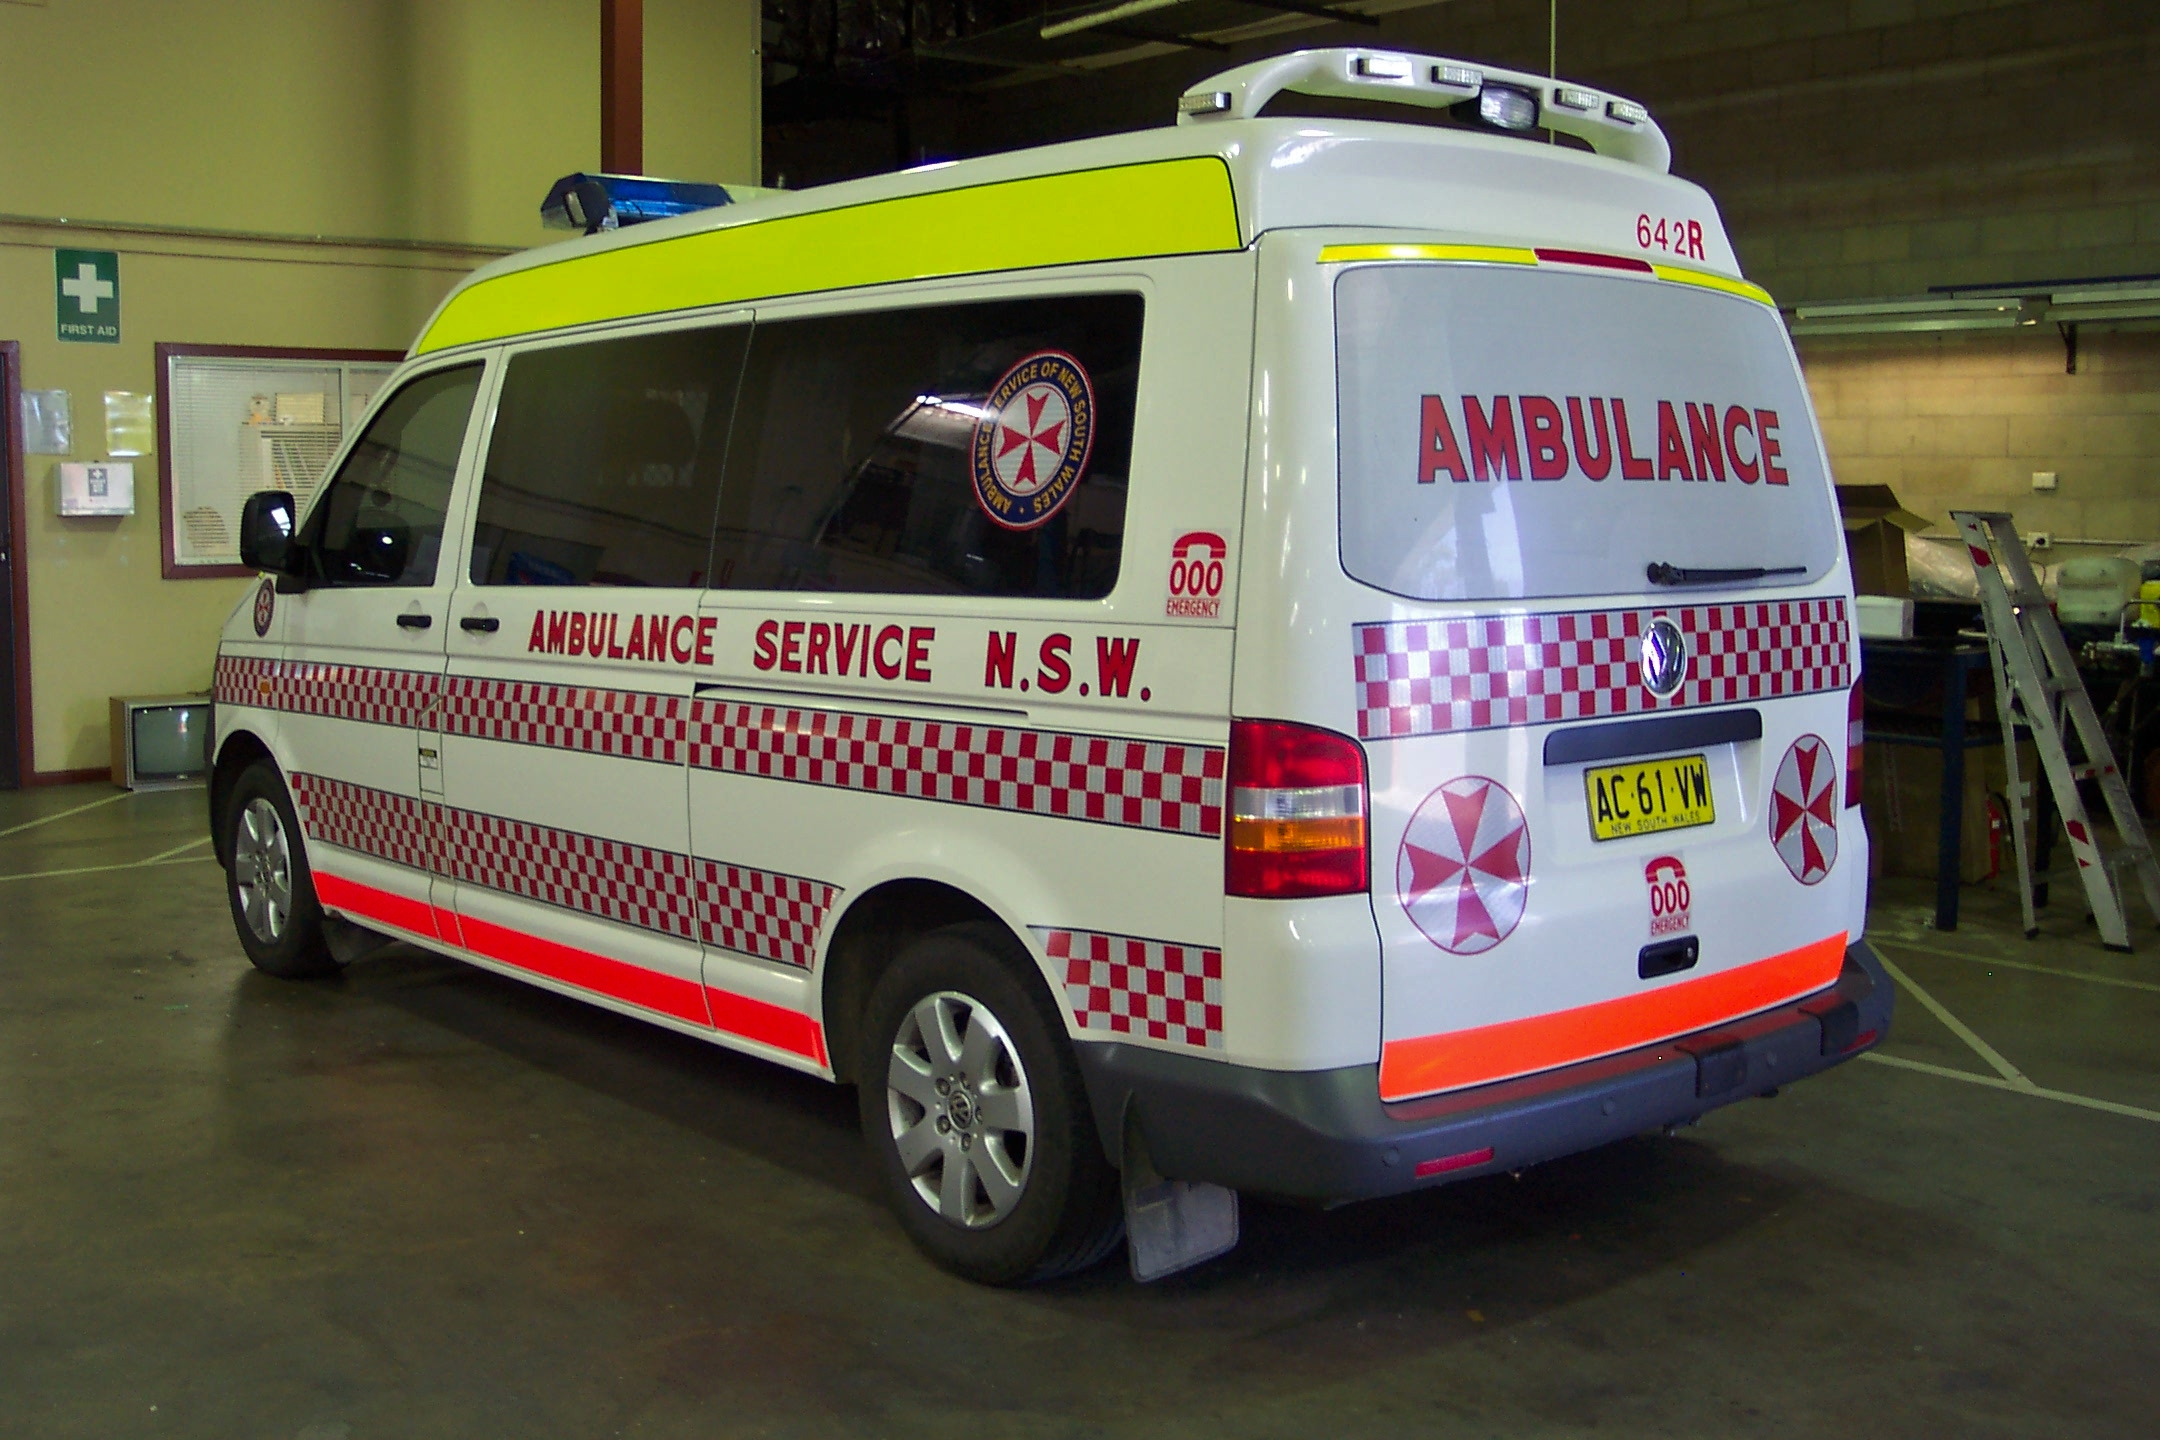 the ambulance has emergency equipment on its back